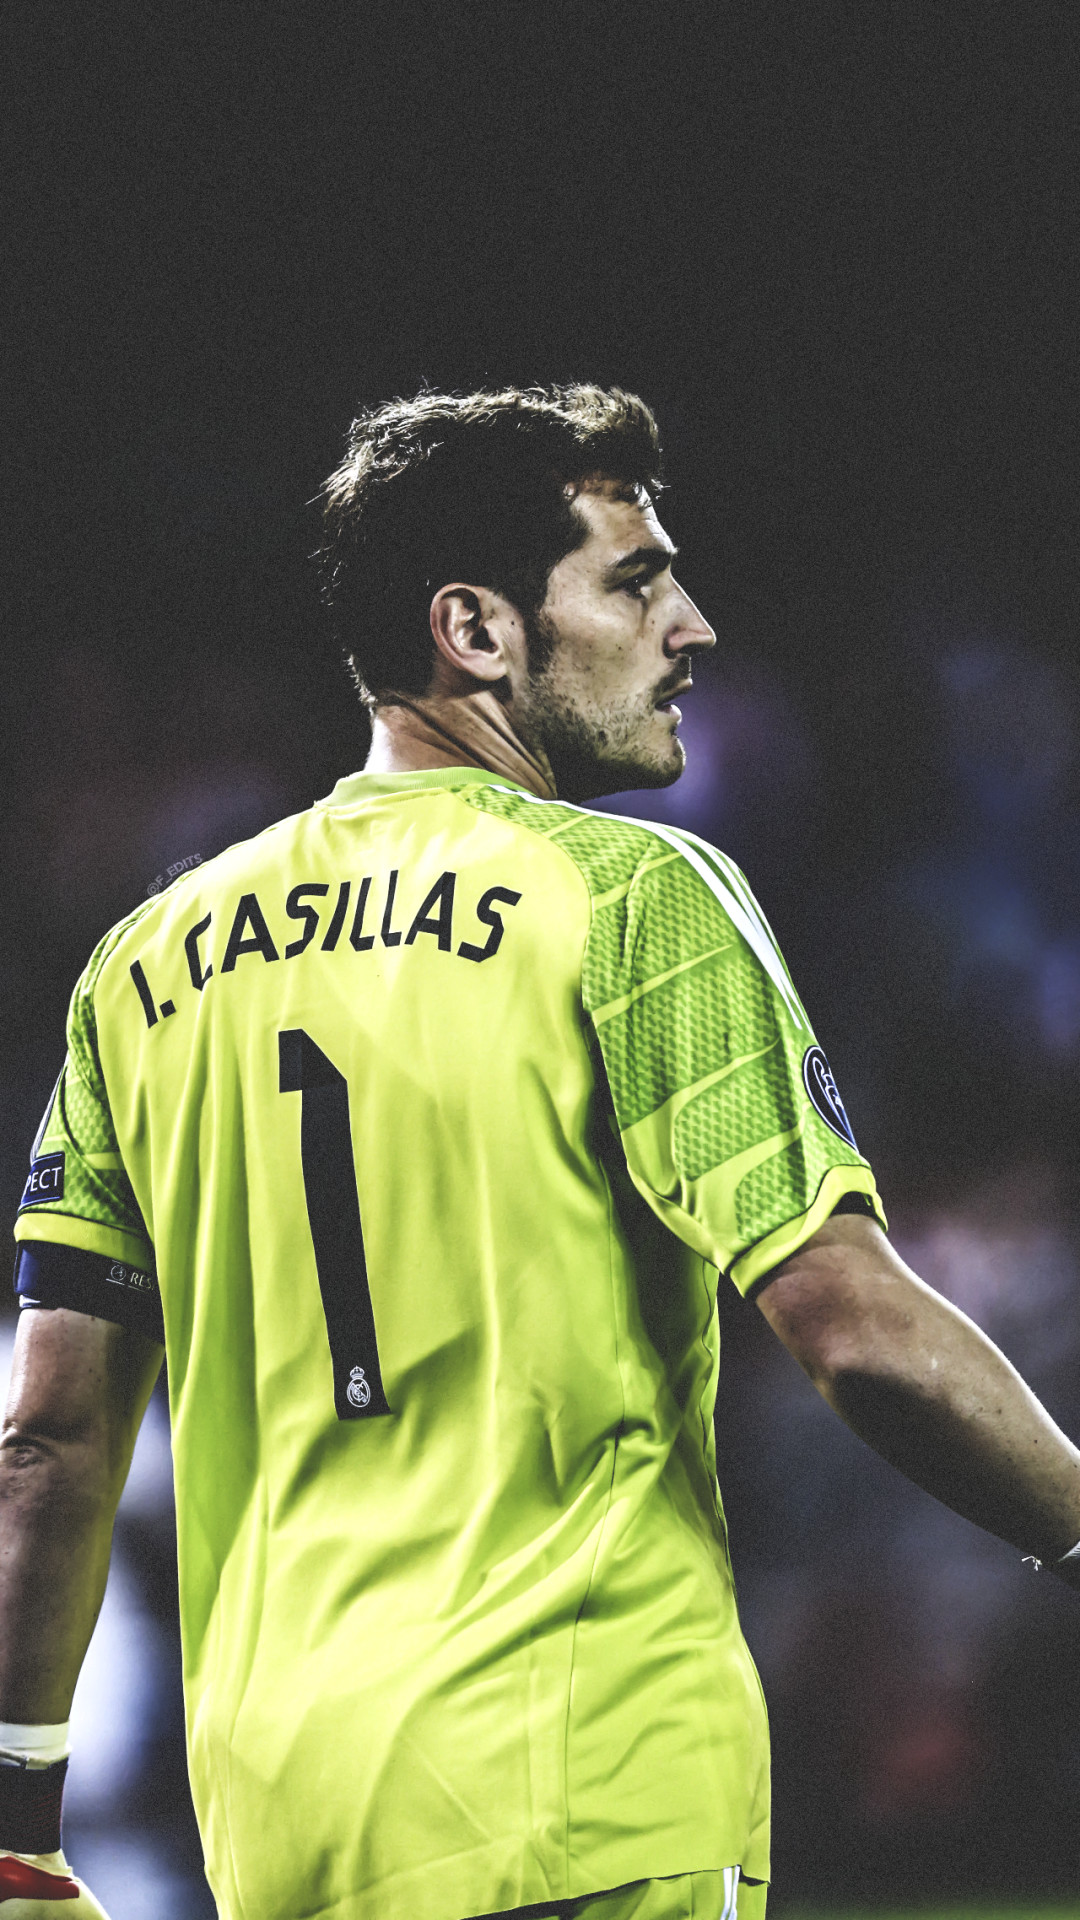 Casillas Wallpaper